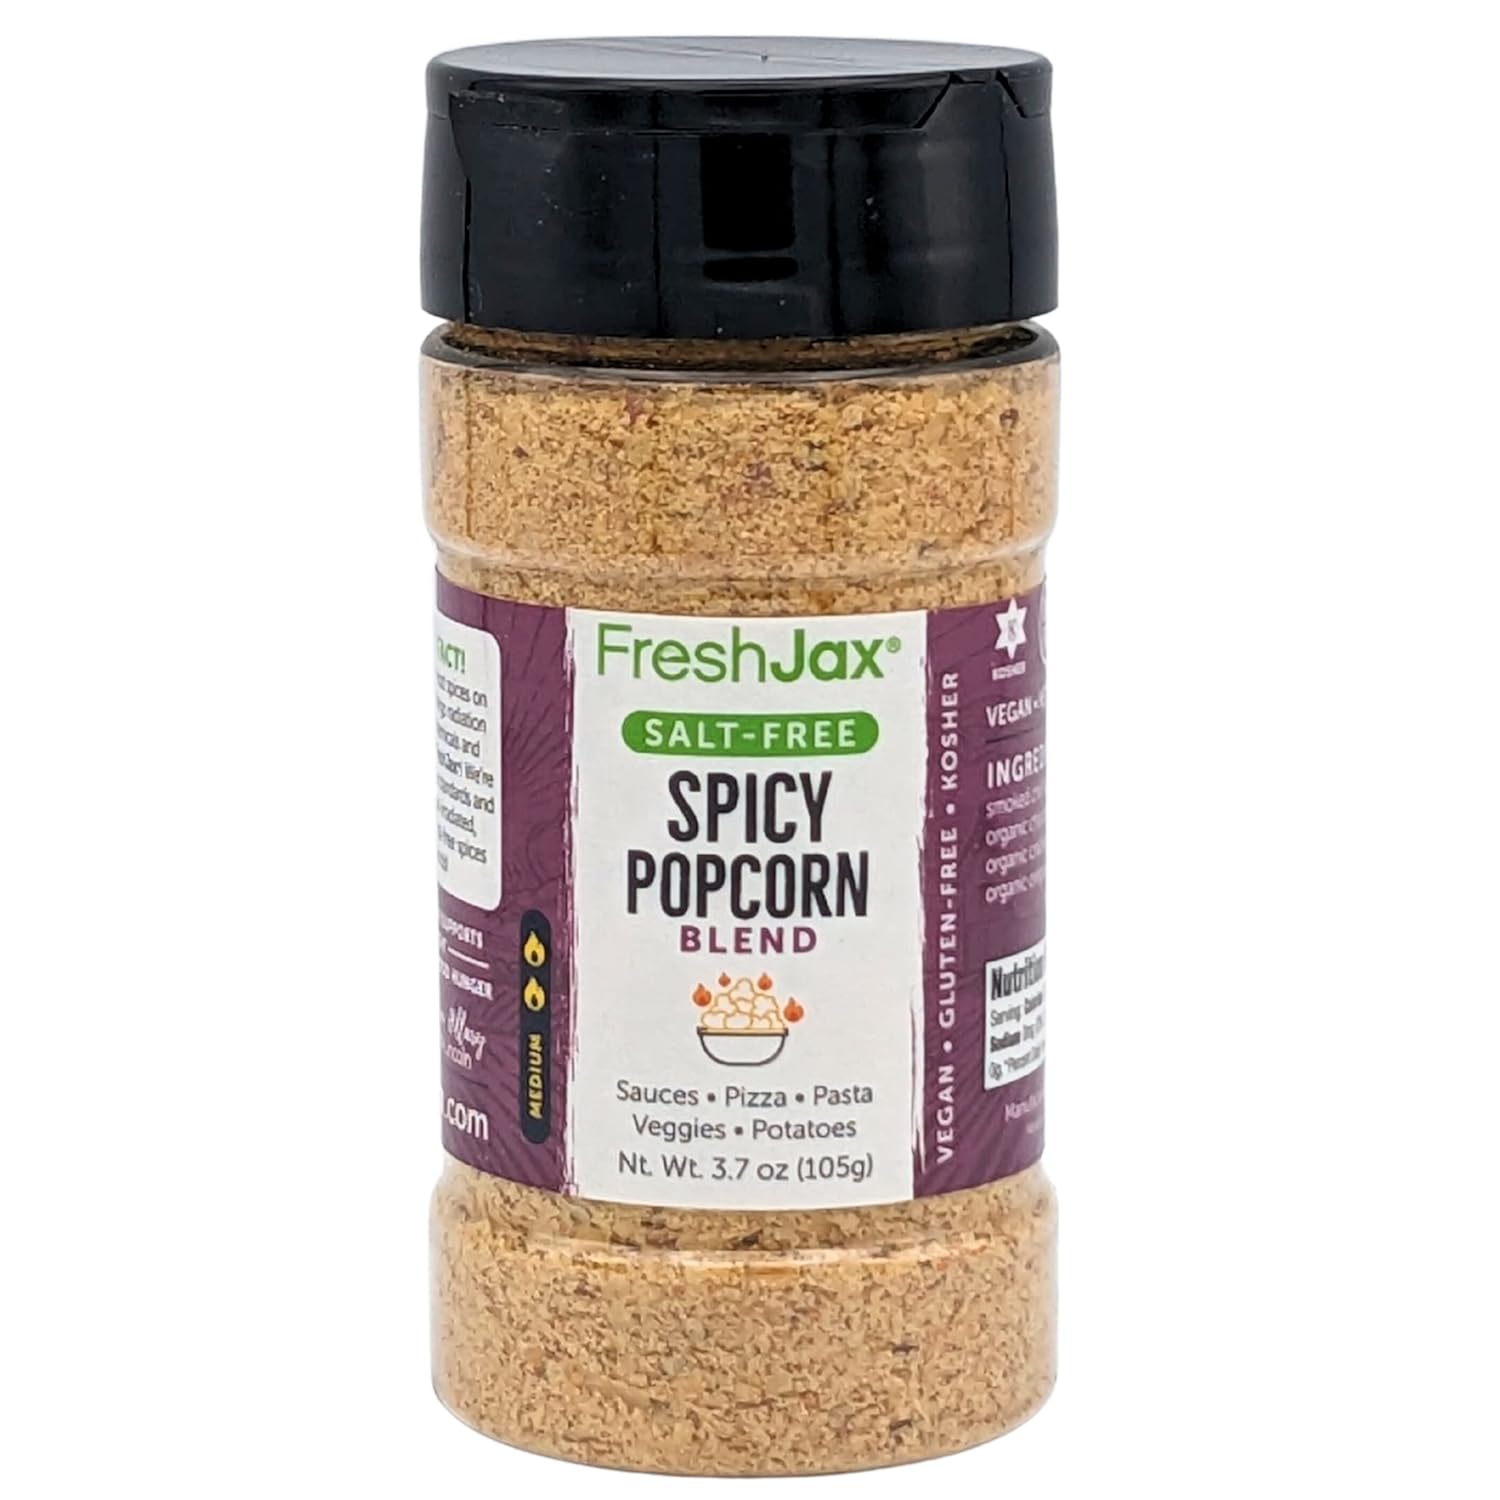 FreshJax Spicy Popcorn Seasoning Salt Free (3.7 oz Bottle) Non GMO, Gluten Free, Keto, Paleo, No Preservatives Salt-Free Popcorn Flavoring with Zero Calories | Handcrafted in Jacksonville